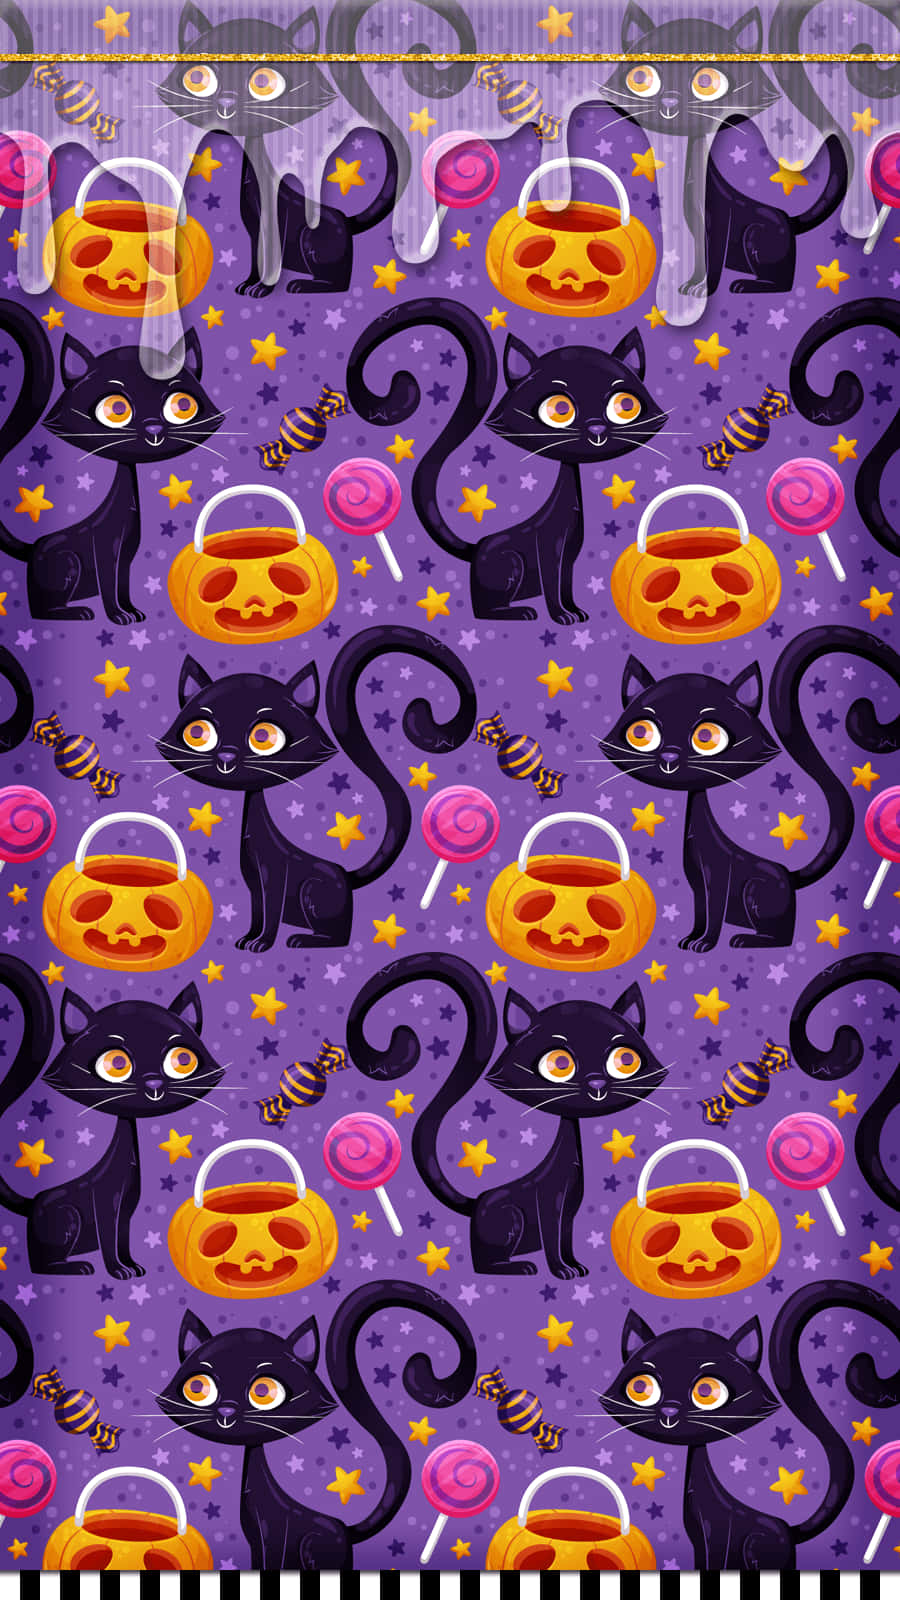 Adorable Purple Halloween Digital Art Wallpaper